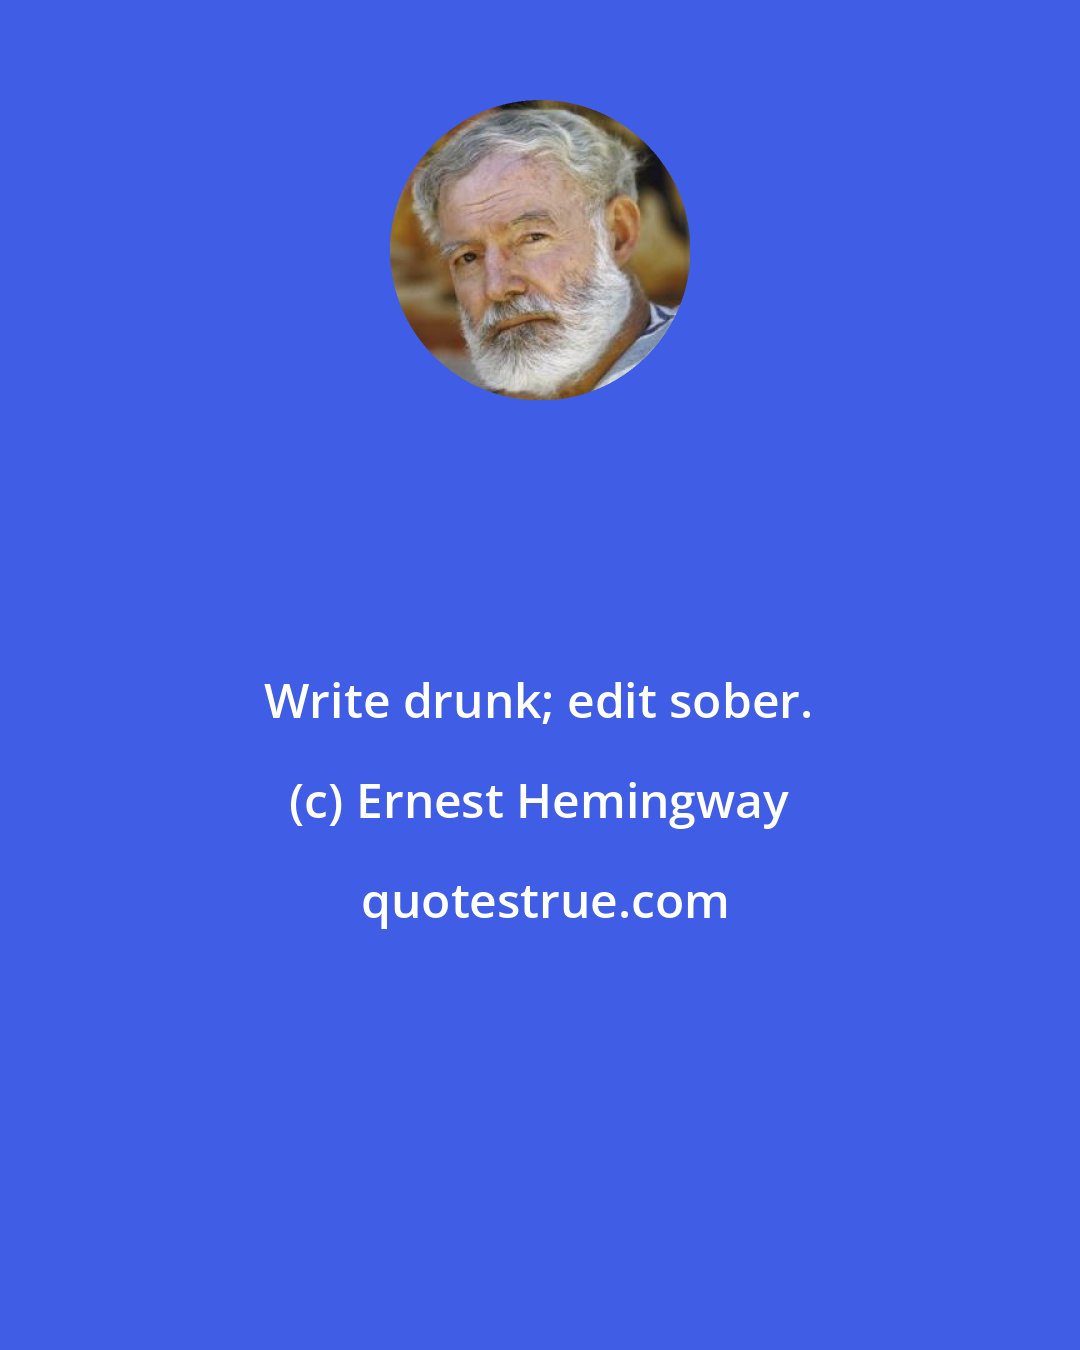 Ernest Hemingway: Write drunk; edit sober.